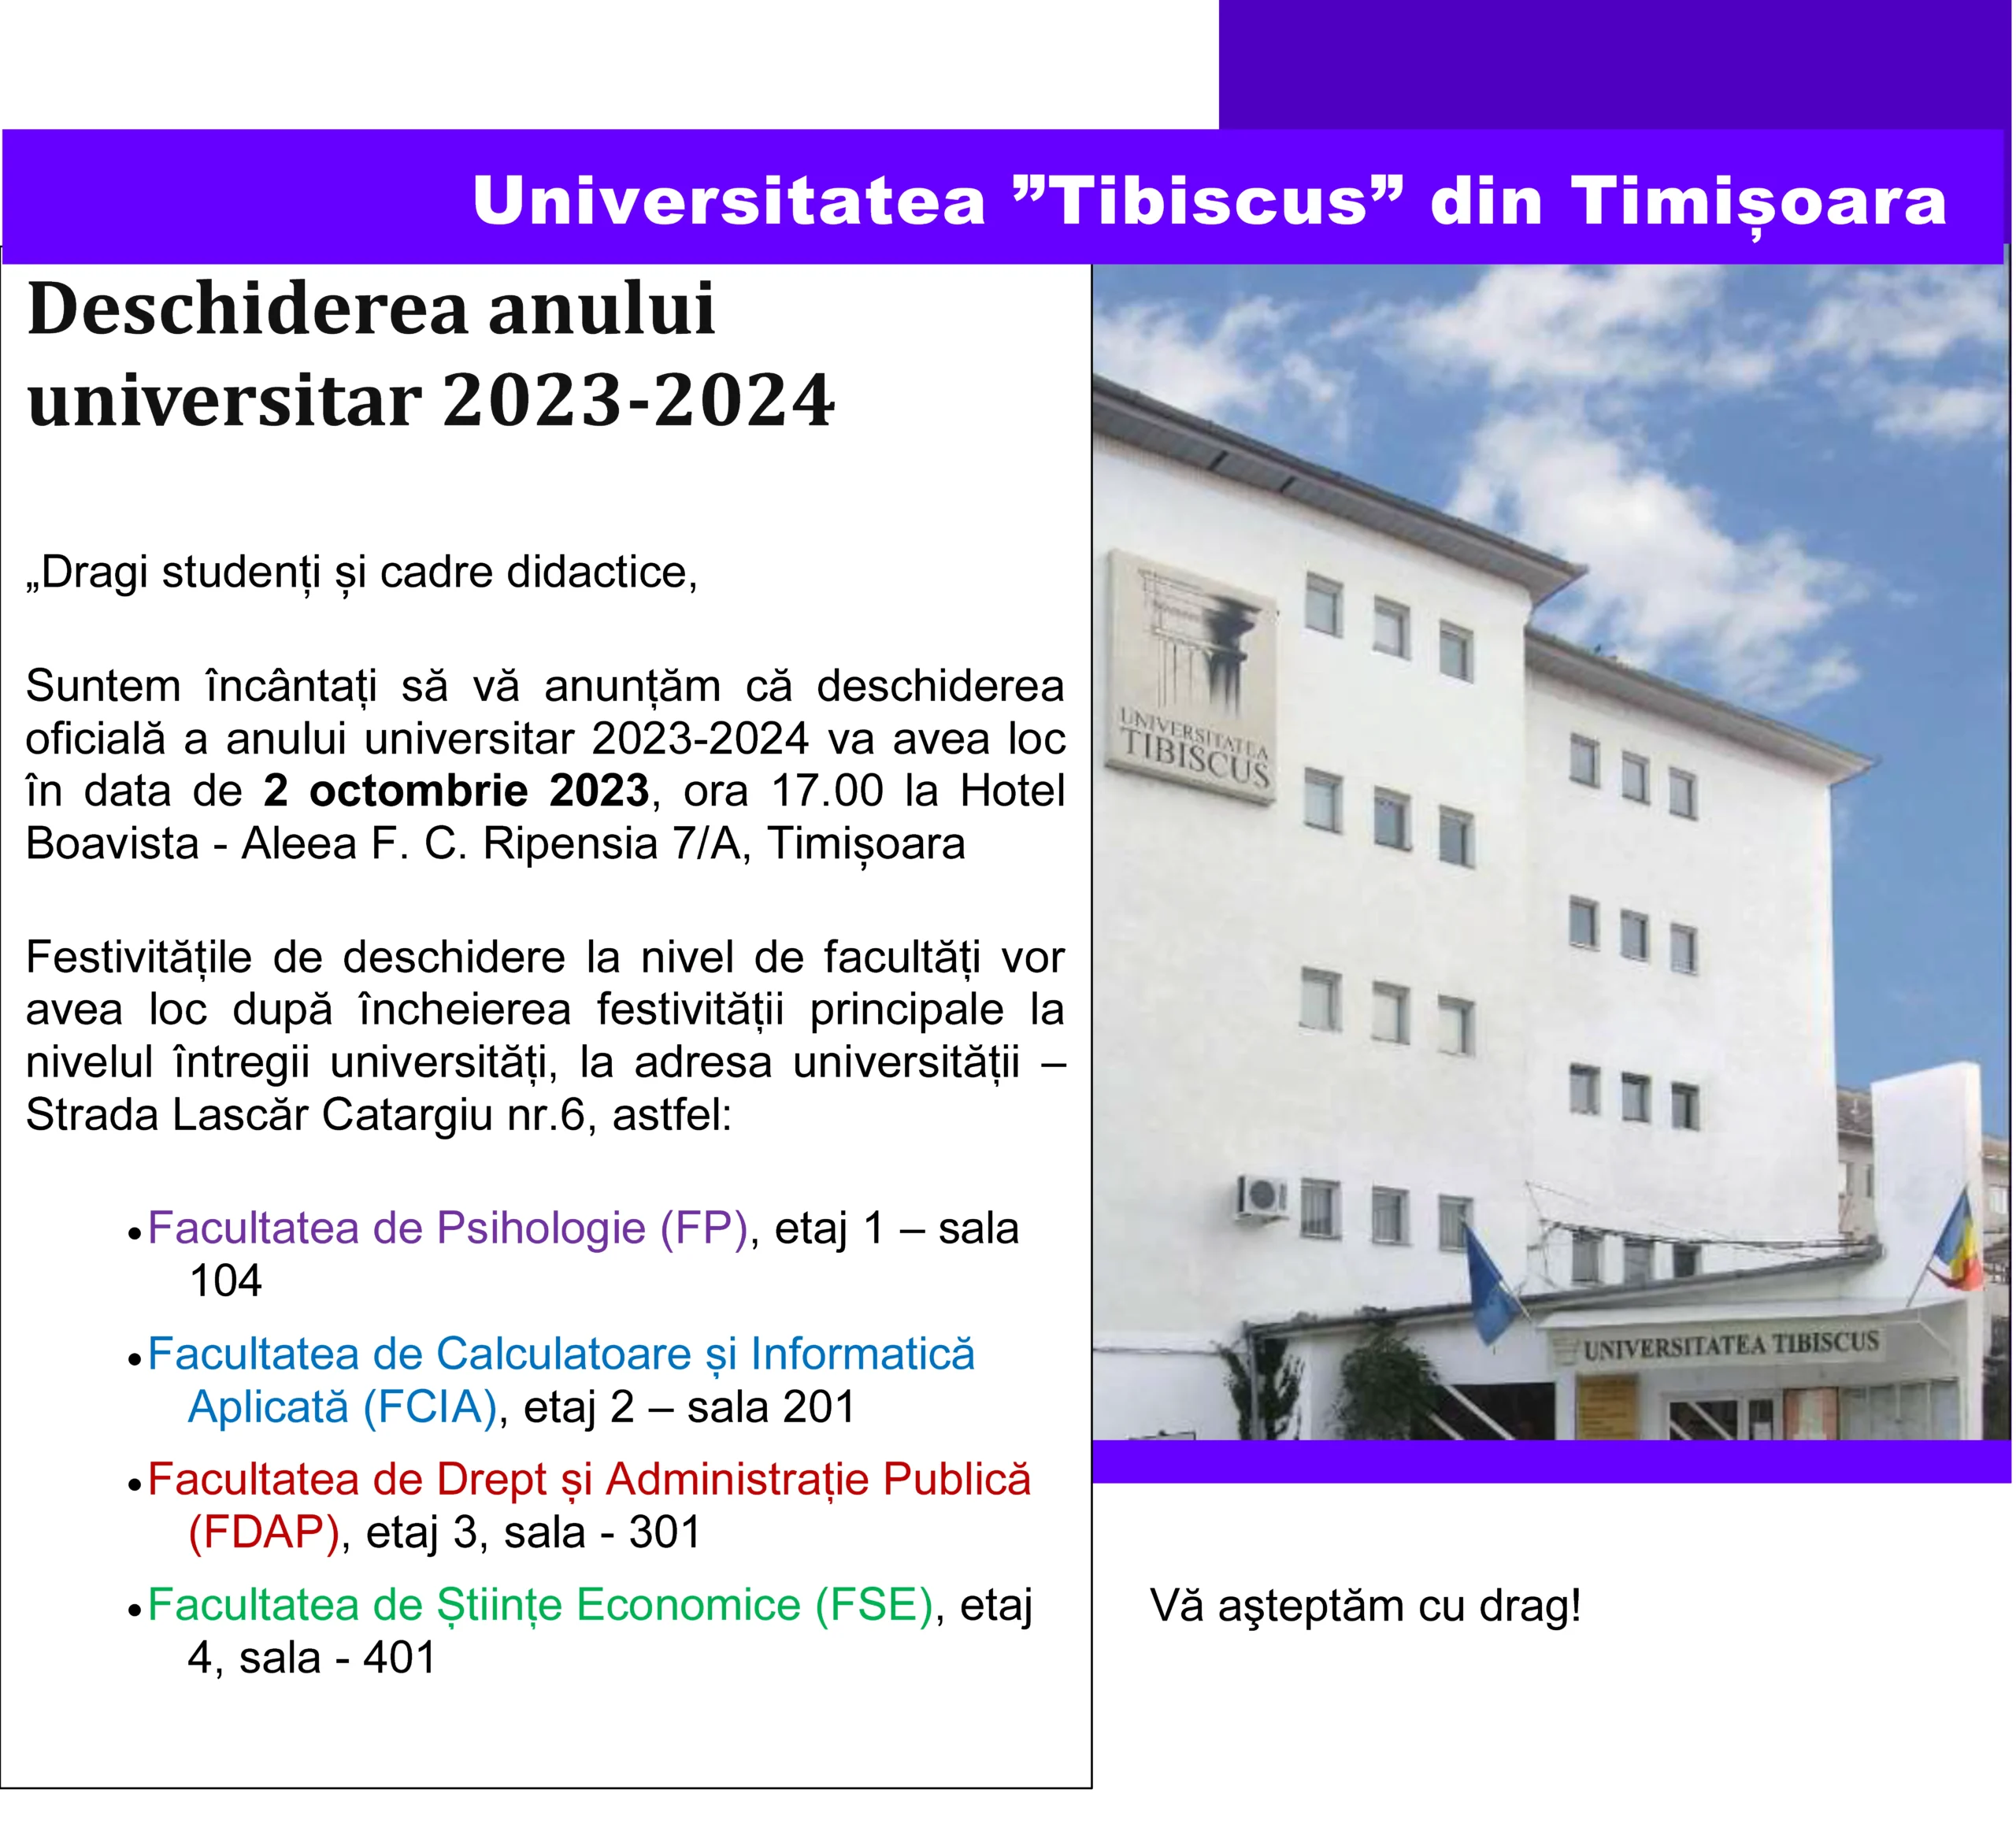 deschidere an universitar 2023 2024 universitatea tibiscus din timisoara